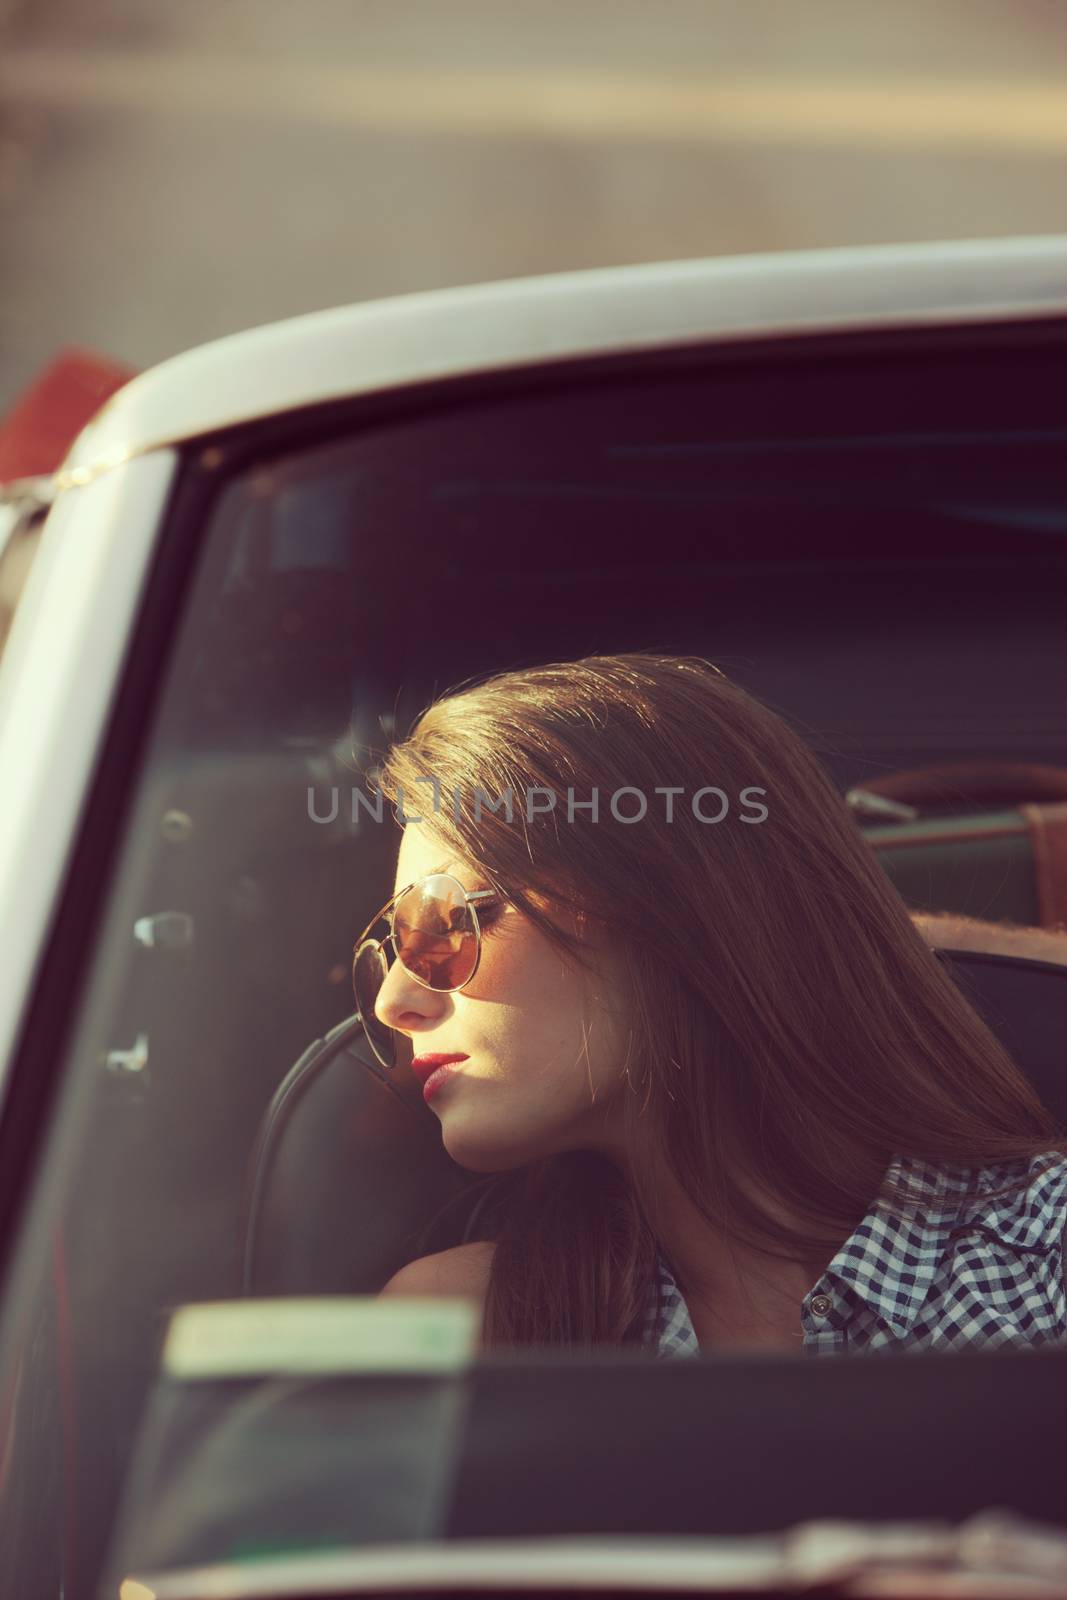 Young beautiful woman sleeping in a convertible car